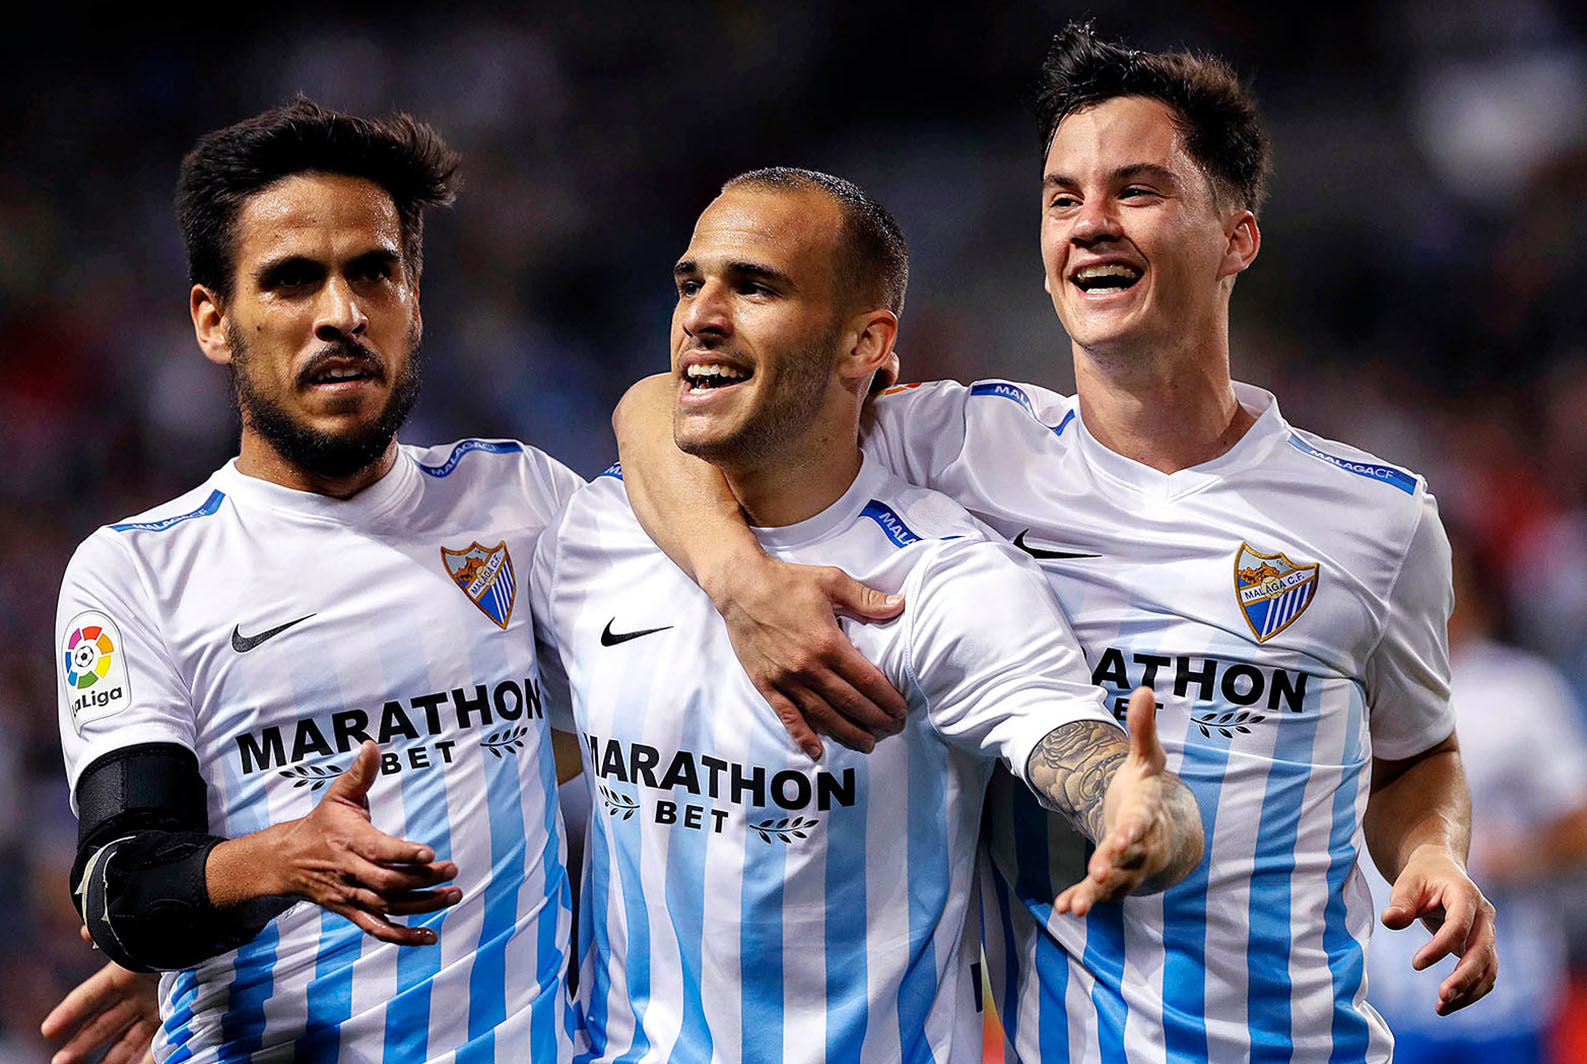 Málaga Club de Fútbol SAD